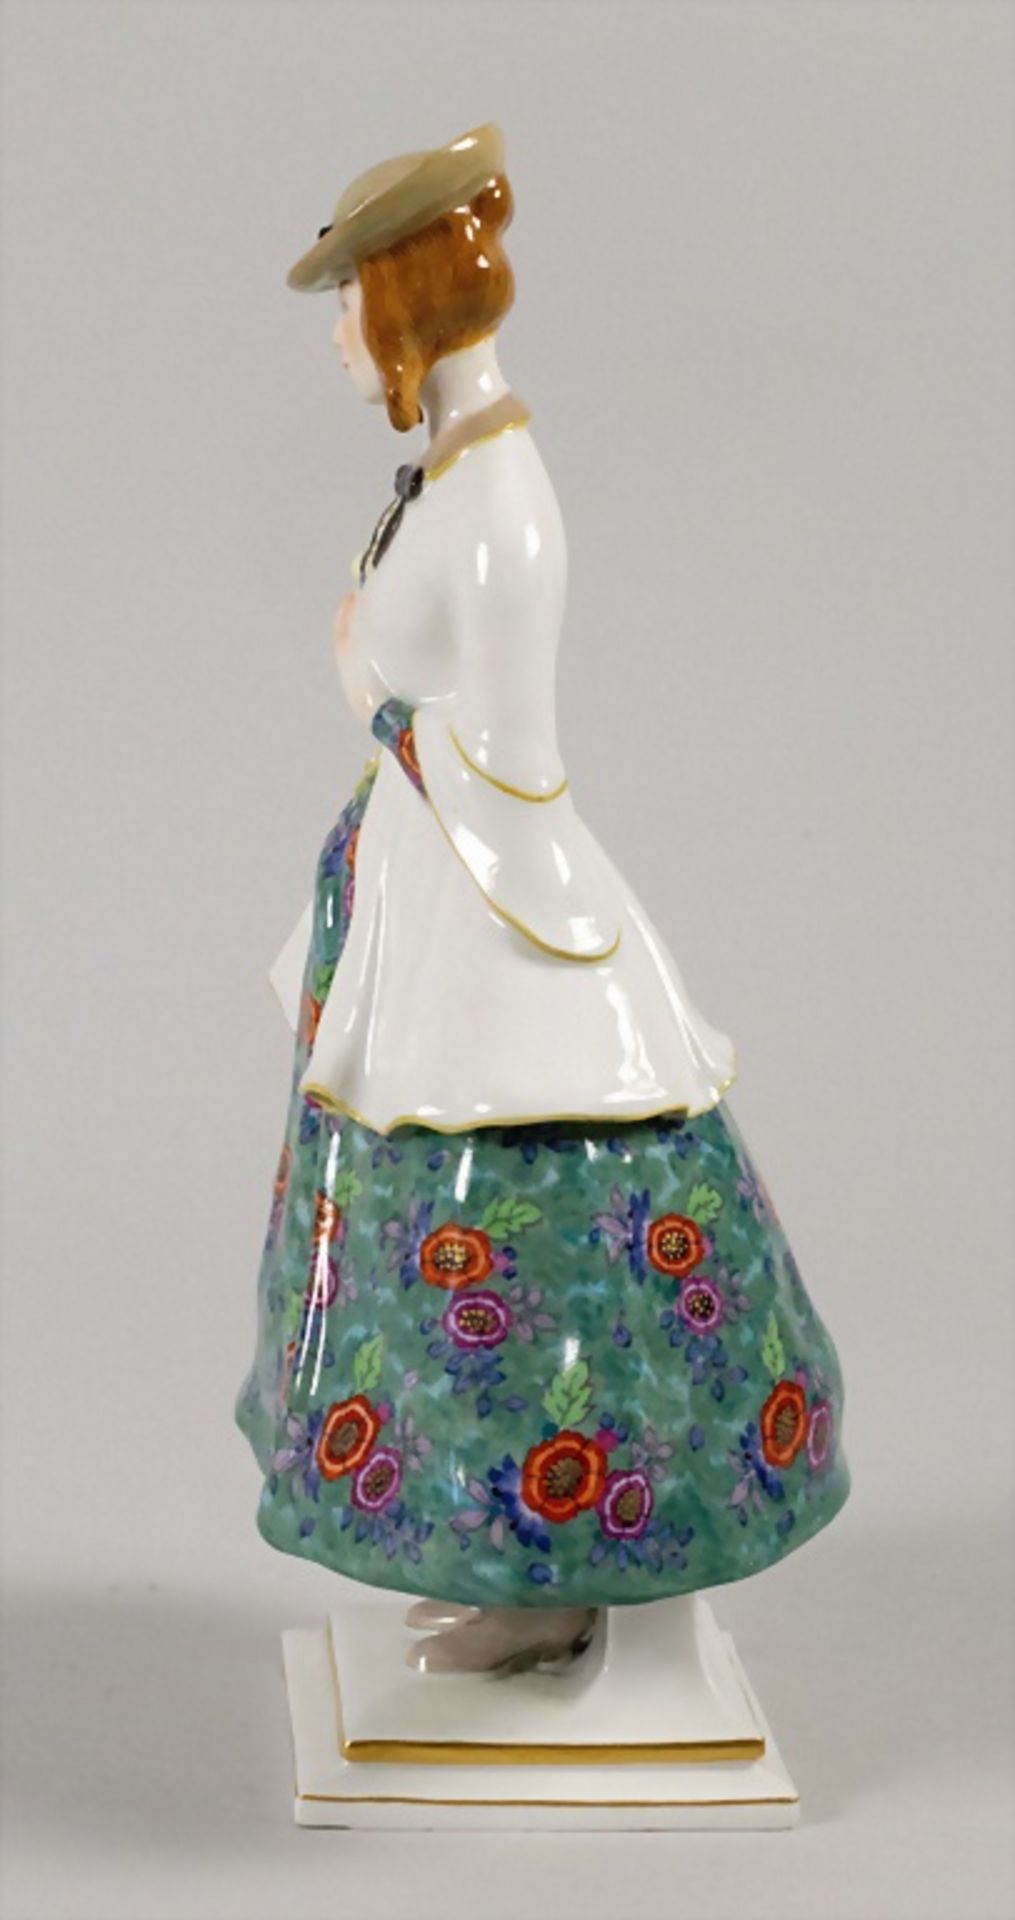 Jugendstil Figur 'Mädchen mit Rose' / An Art Nouveau figurine 'Girl with a rose'', Richard ... - Bild 2 aus 10